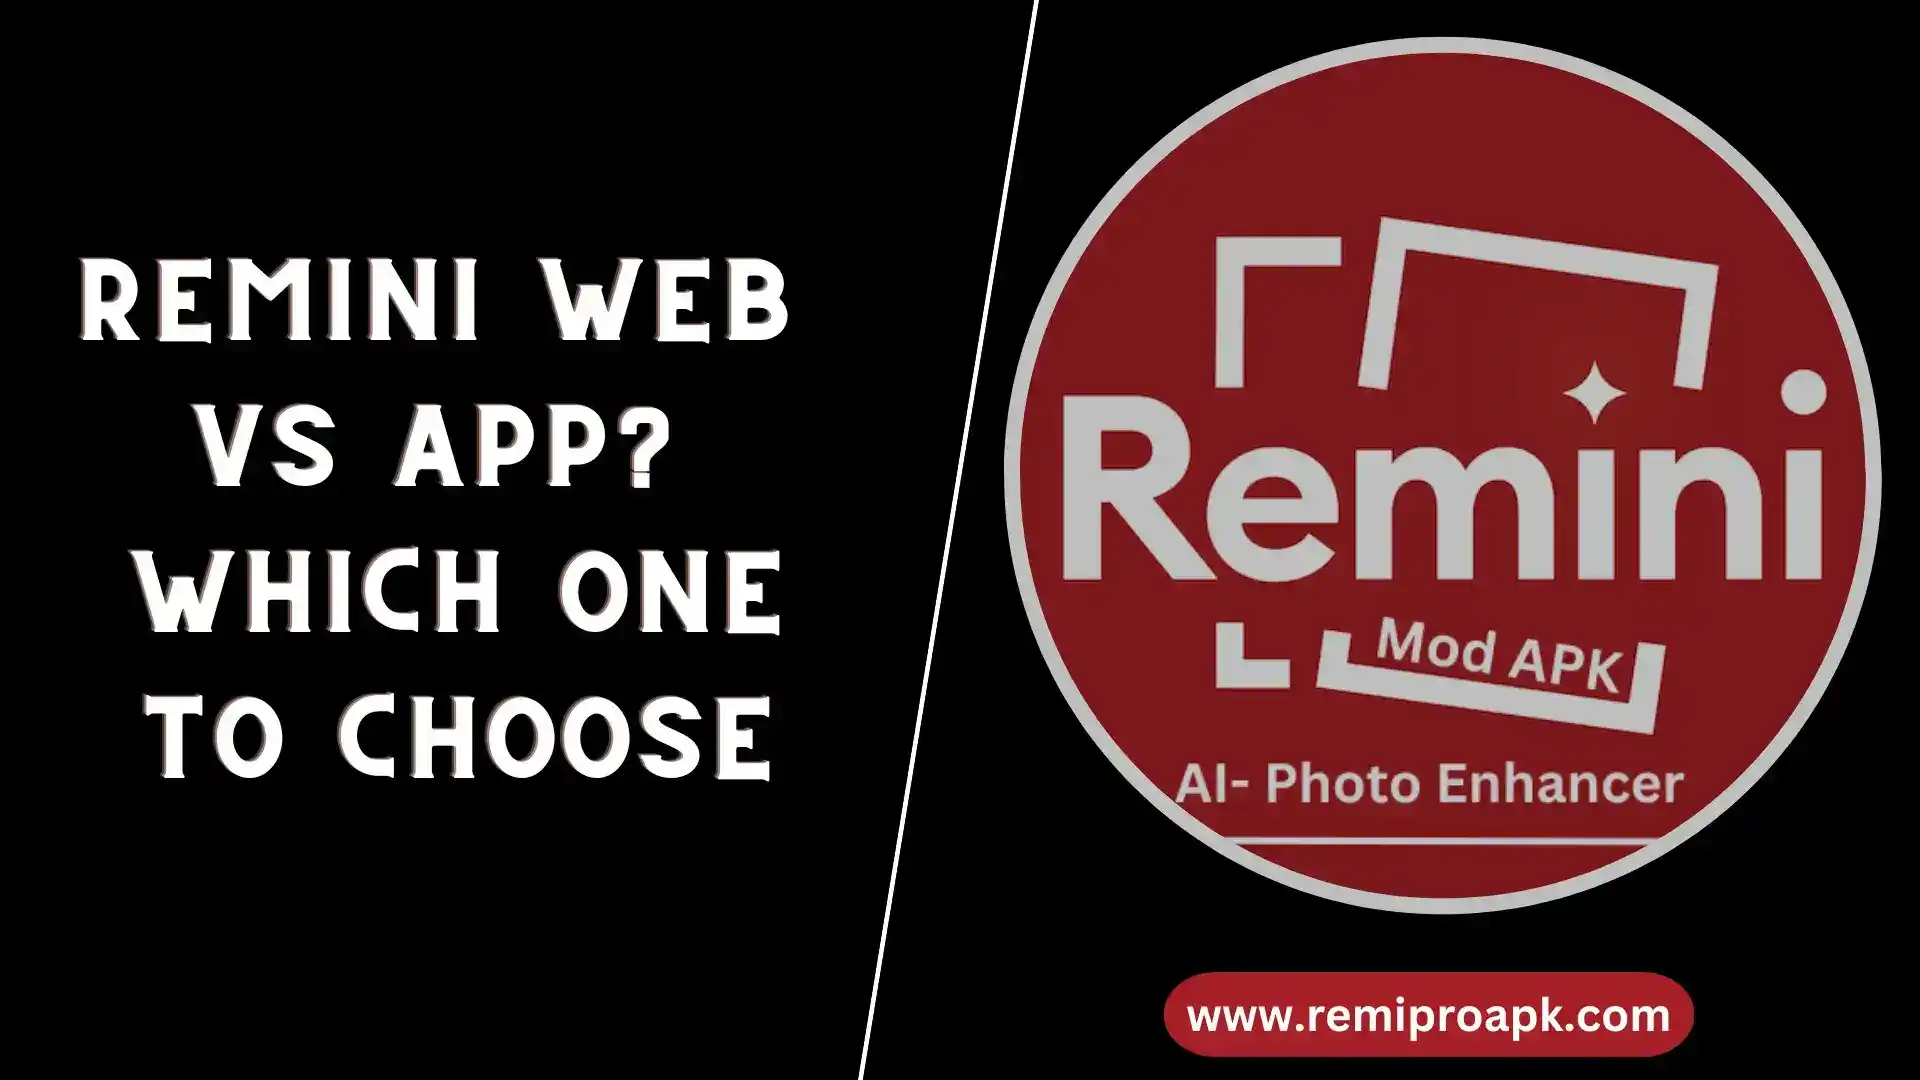 remini web vs app - featured image